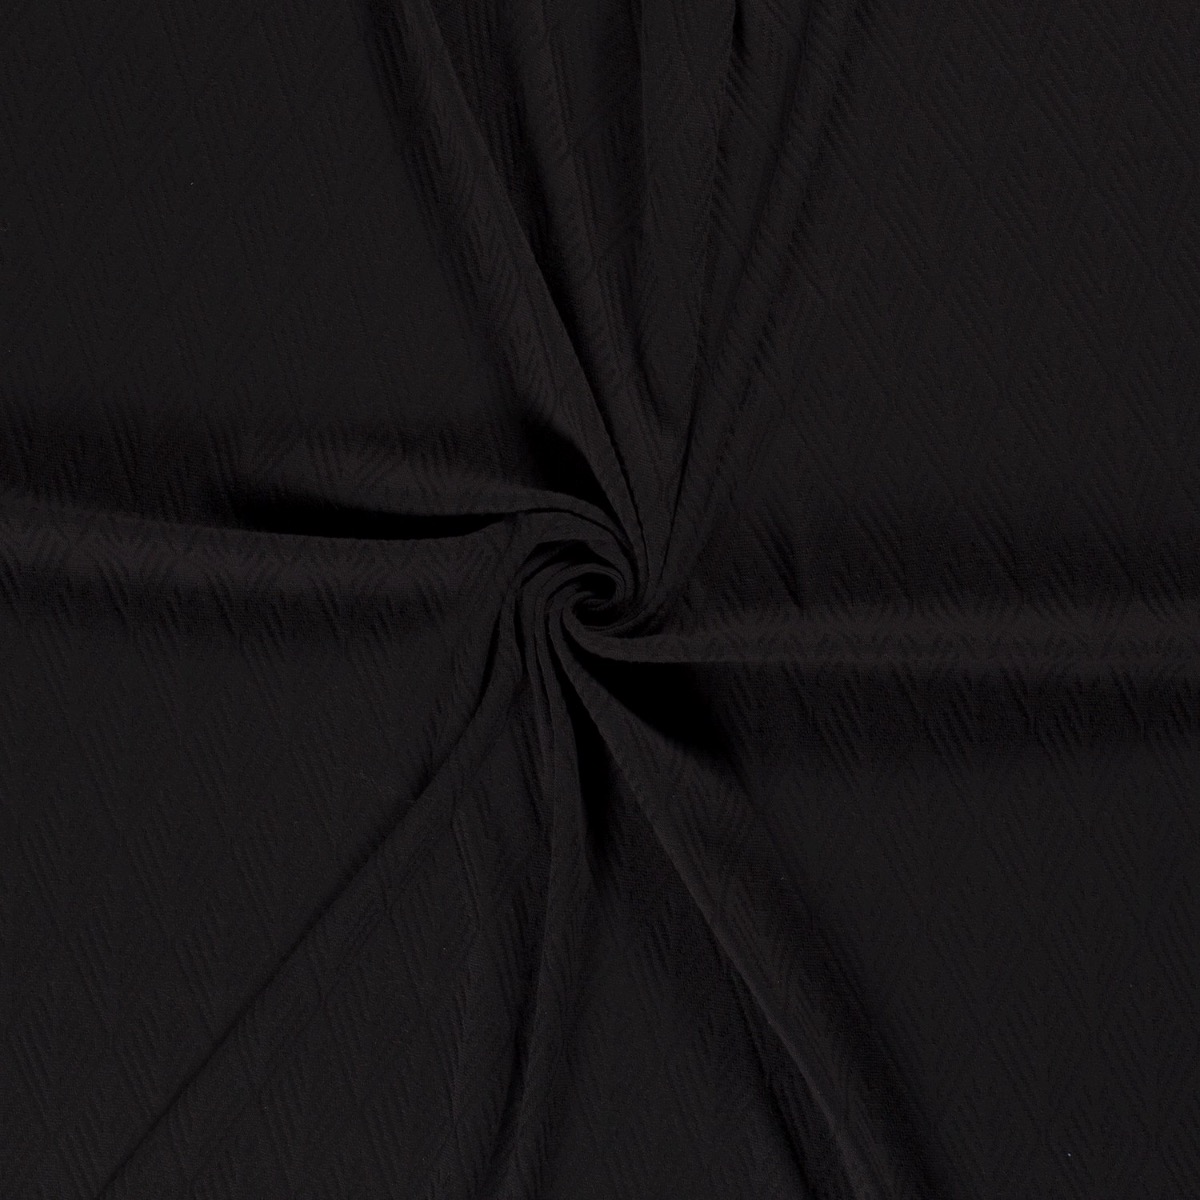 zwart stretch jacquard jersey